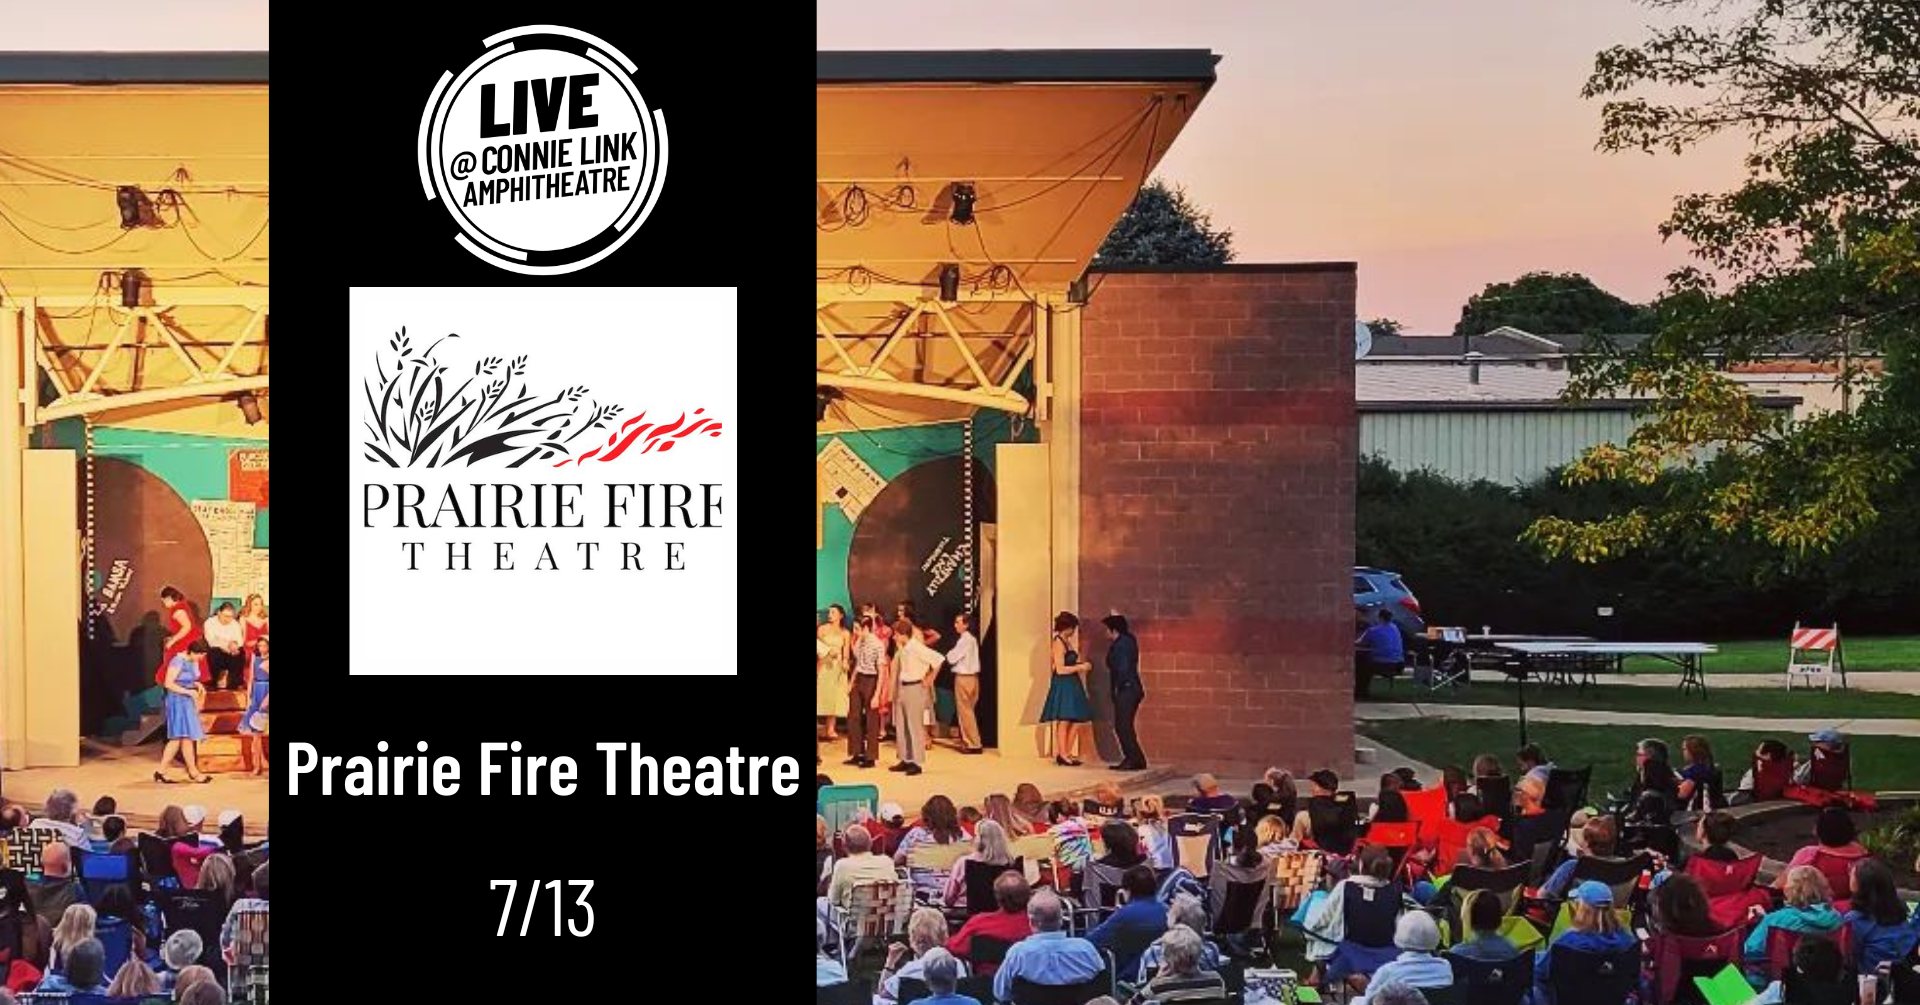 Normal LIVE presents Prairie Fire Theatre - Live @ Connie Link Amphitheatre